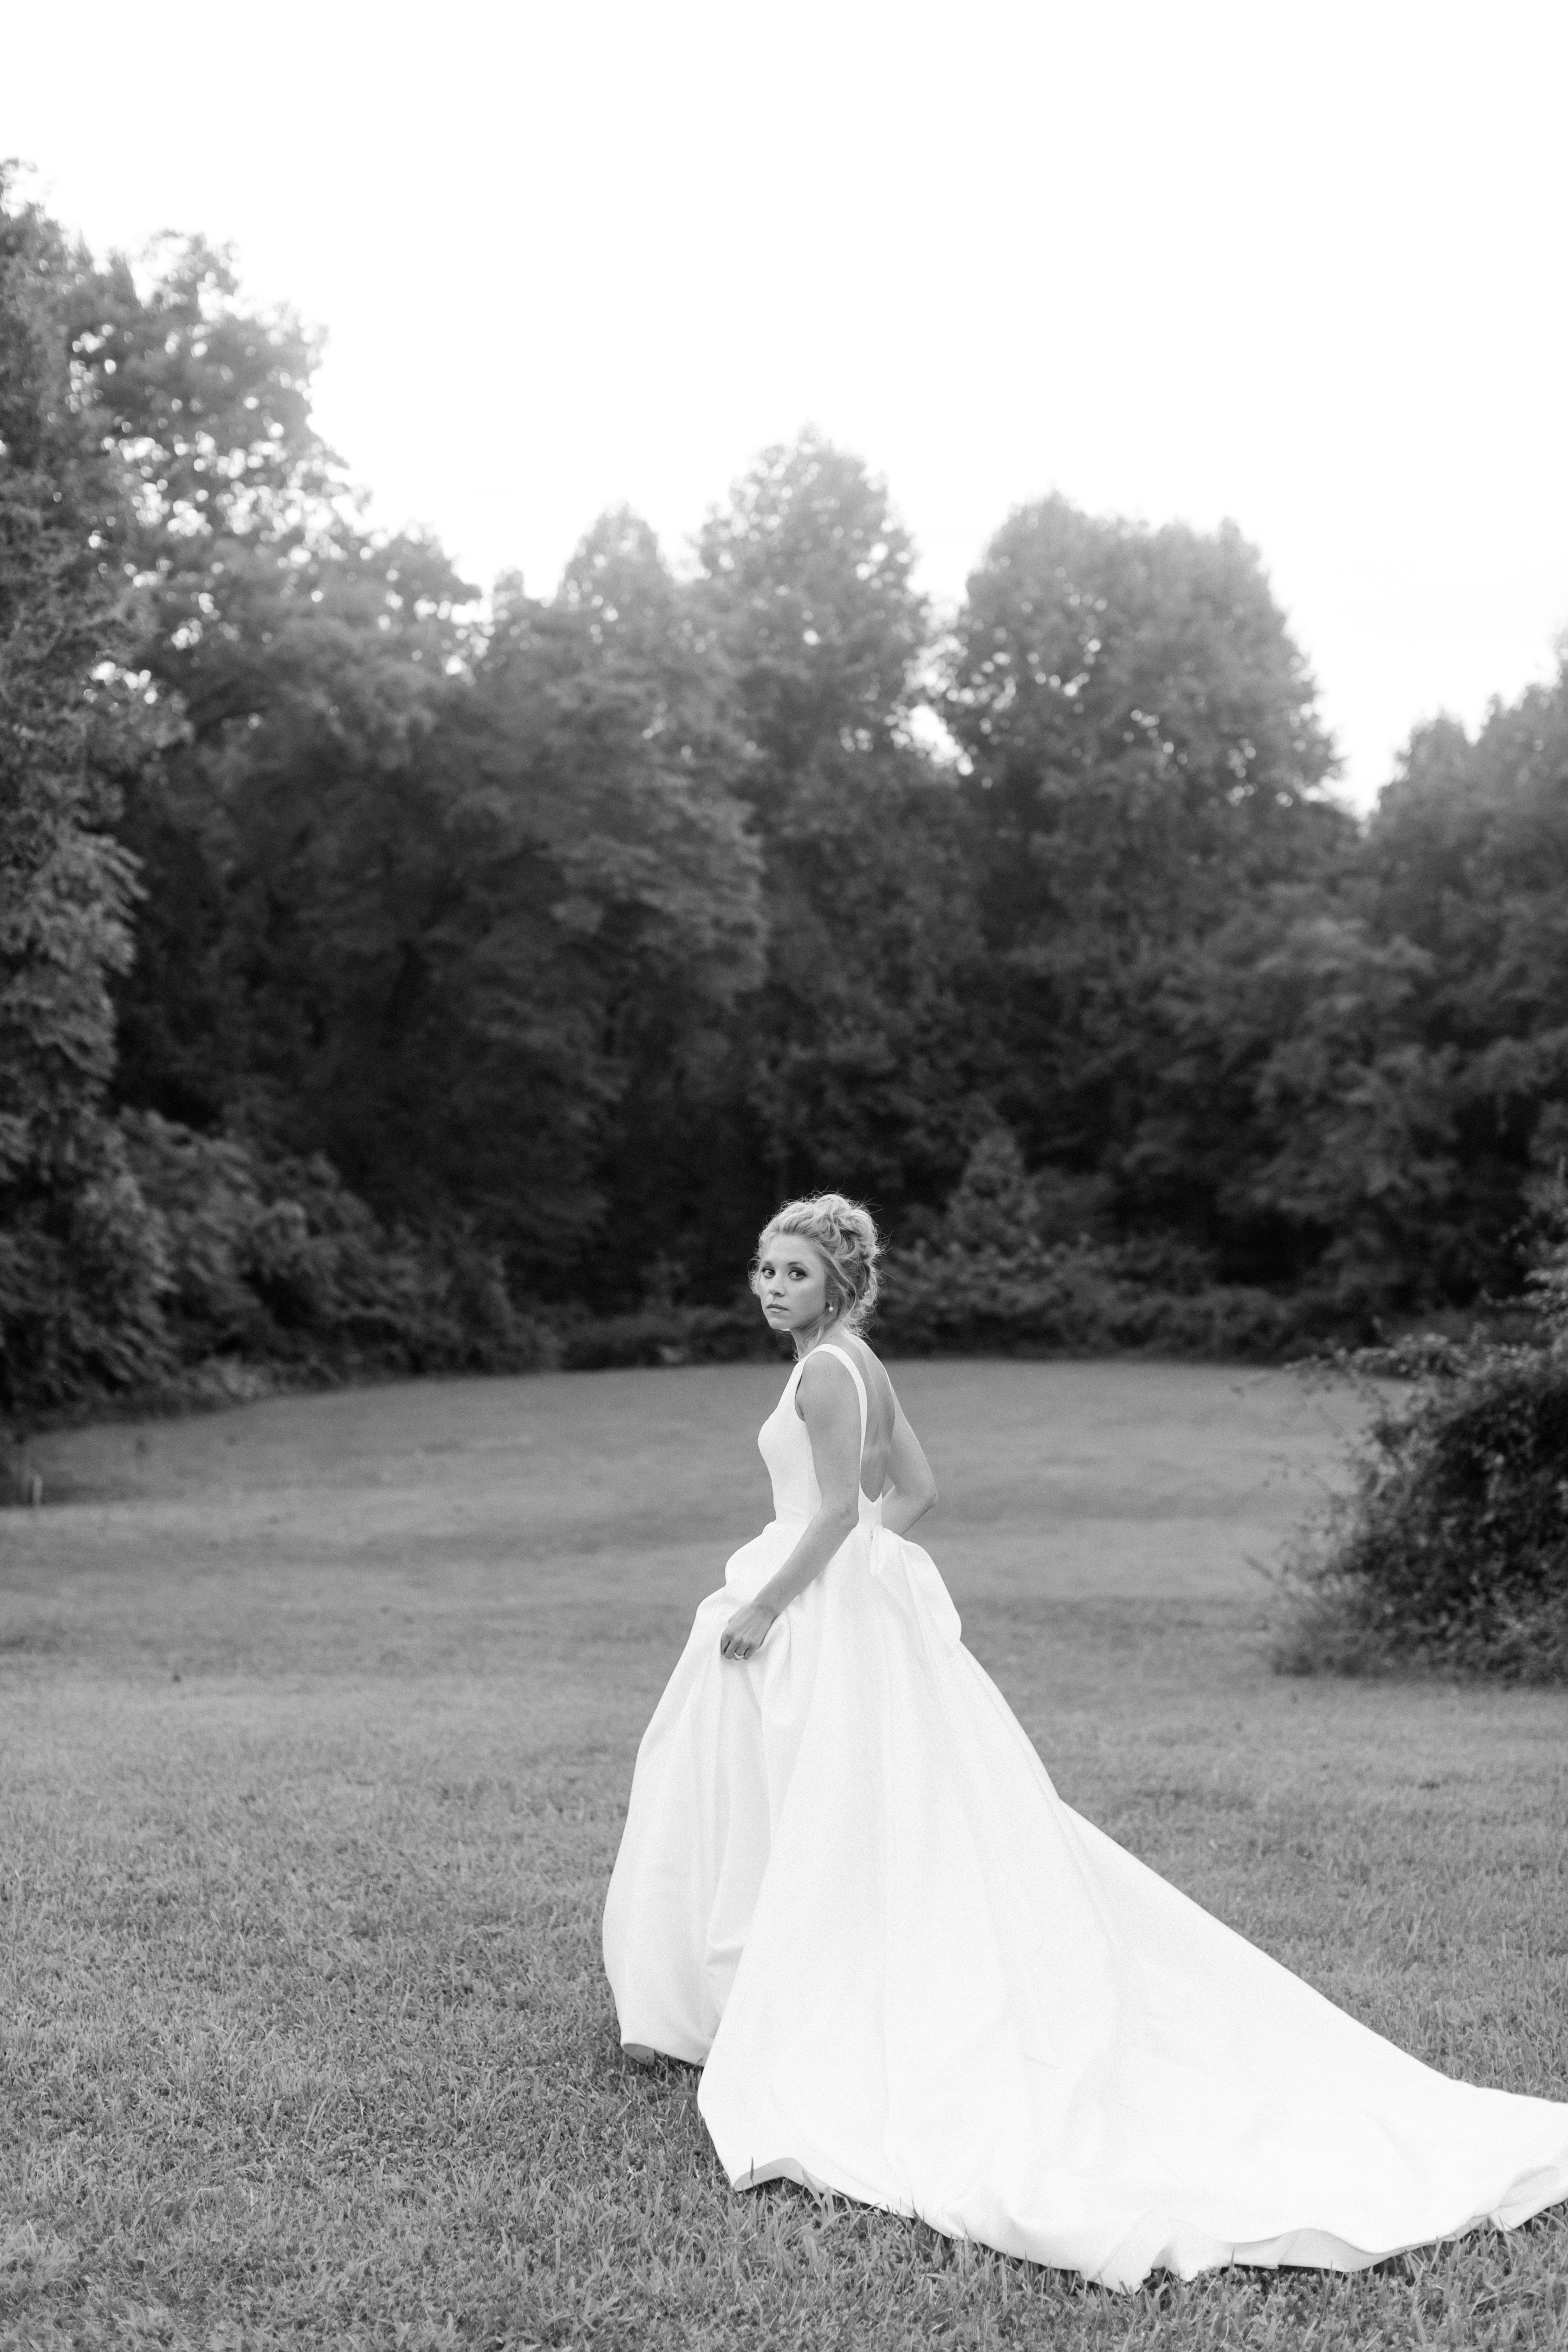 Bridal Portrait at Poplar Springs Manor | Equestrian-Inspired Fall Wedding Editorial at Poplar Springs Manor | Sarah Bradshaw Photography